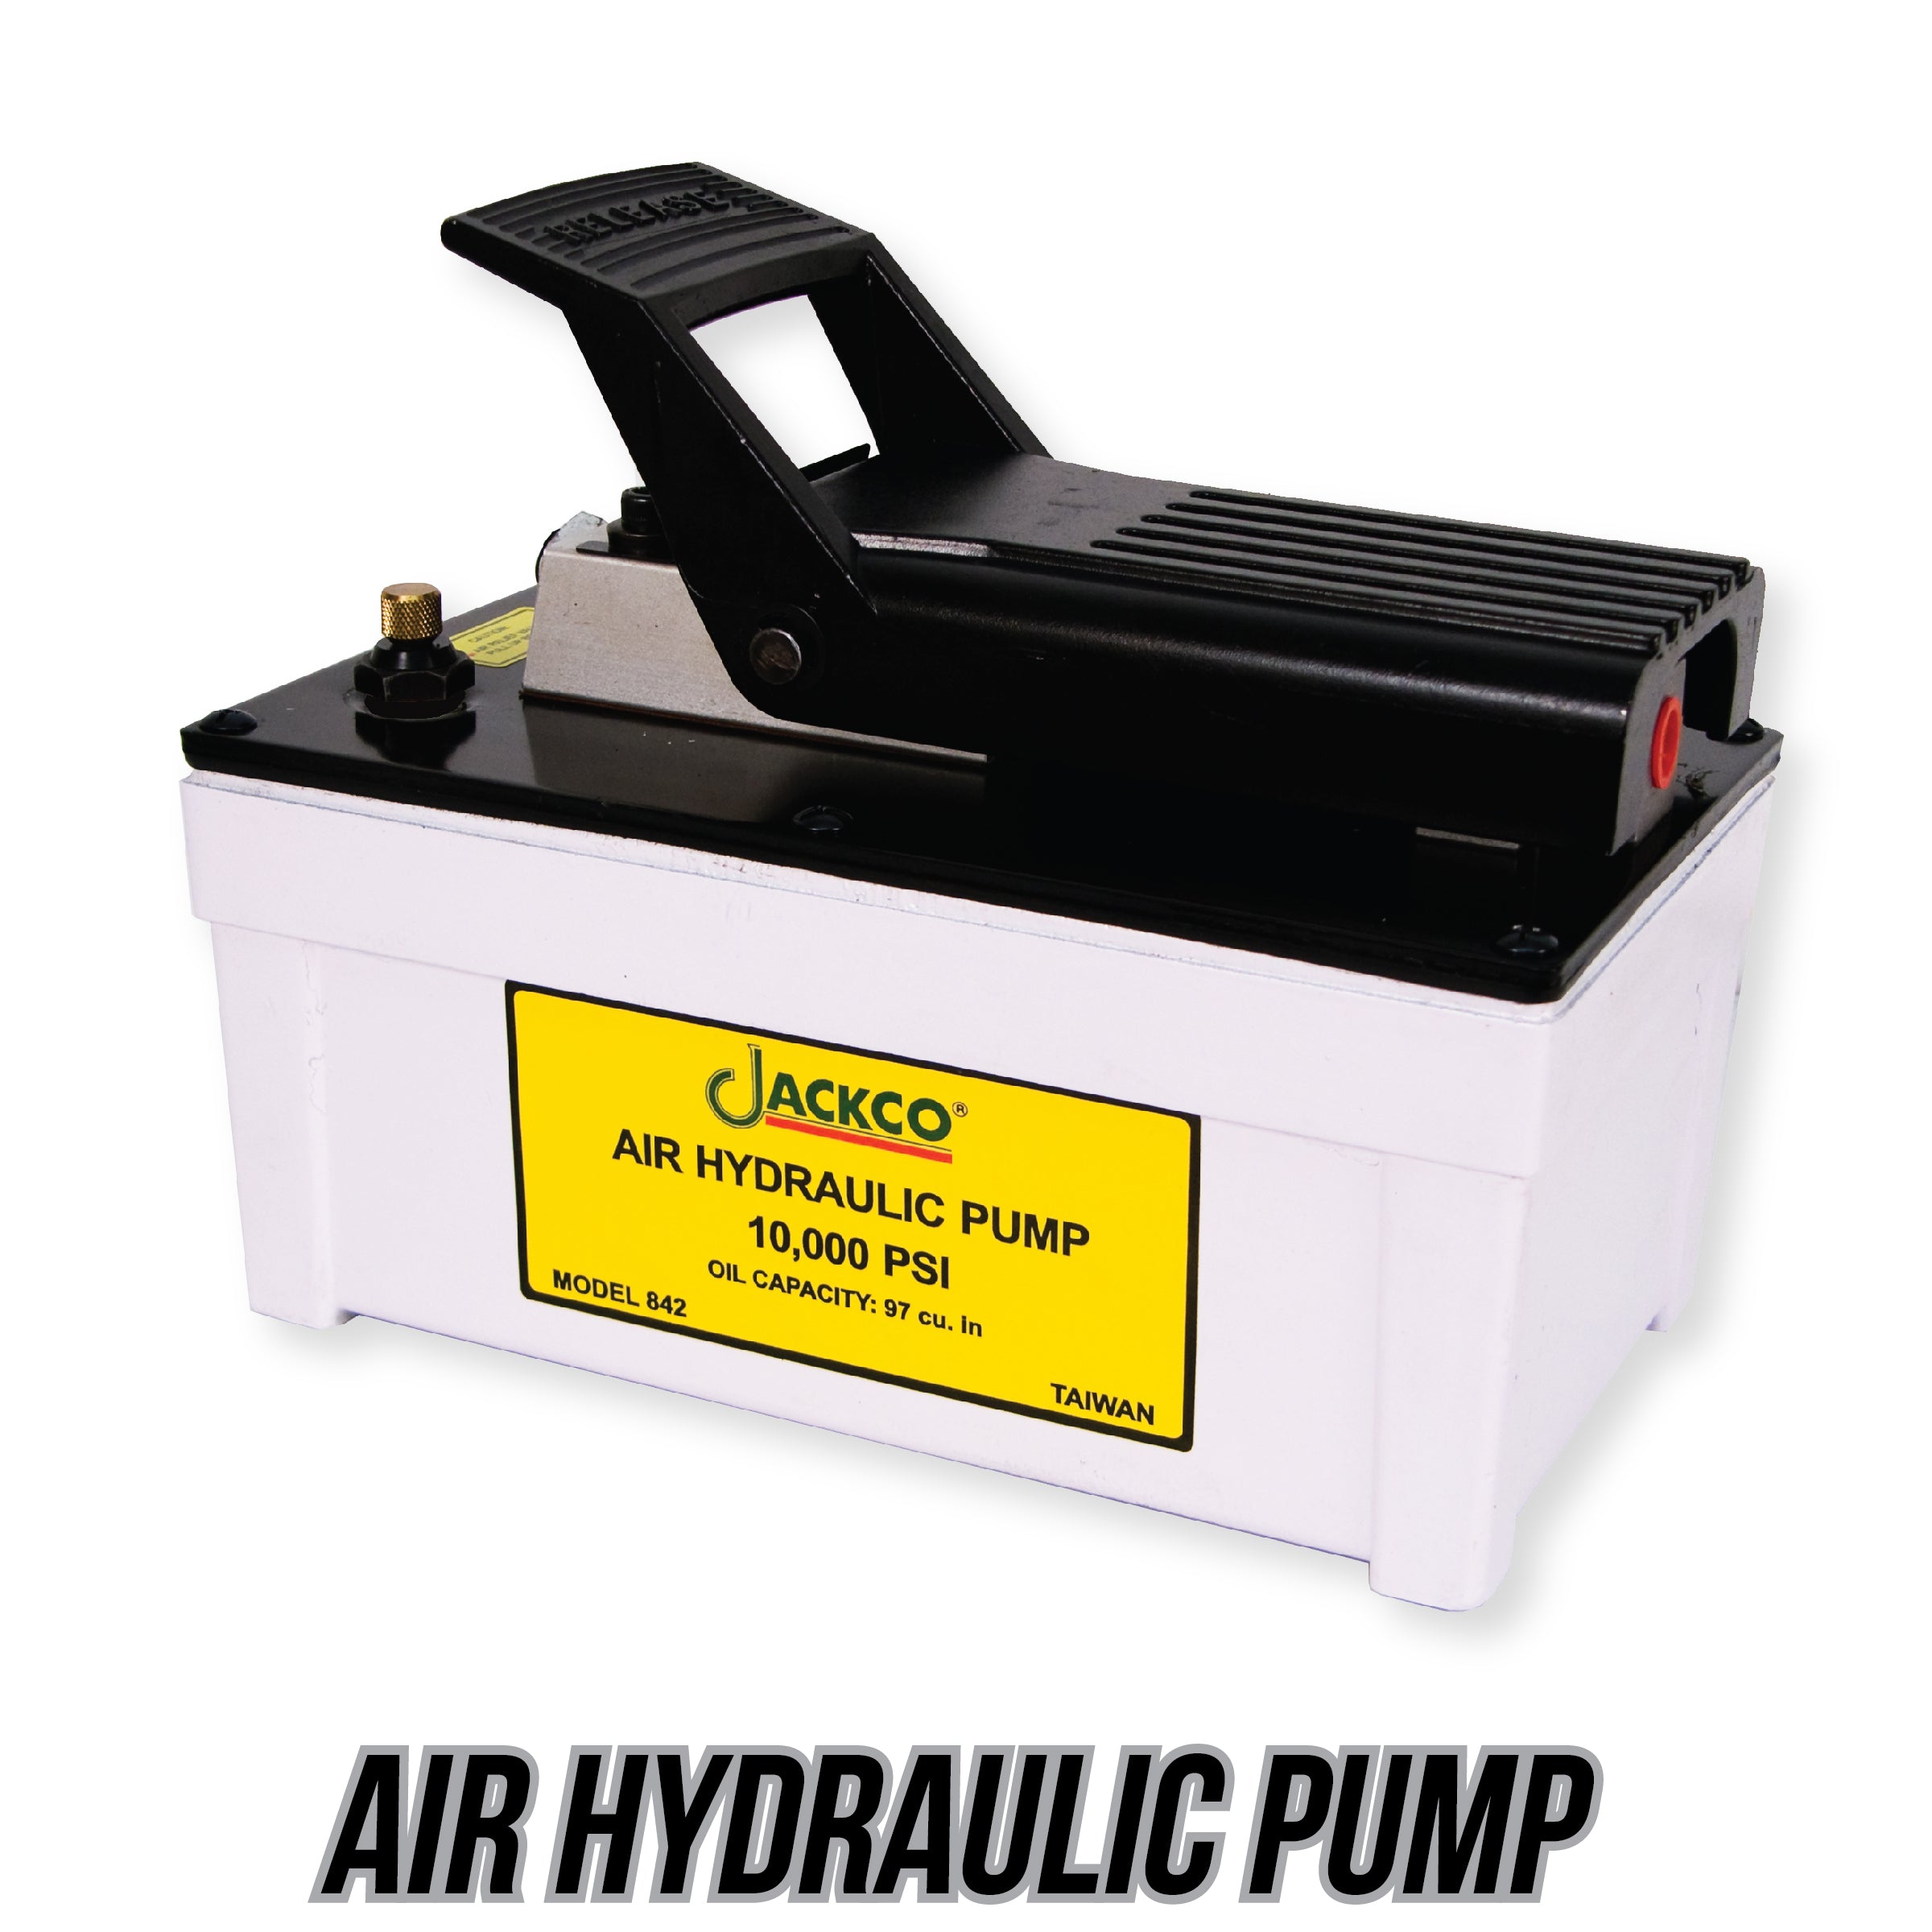 Jackco 10,000 psi Air Hydraulic Pump